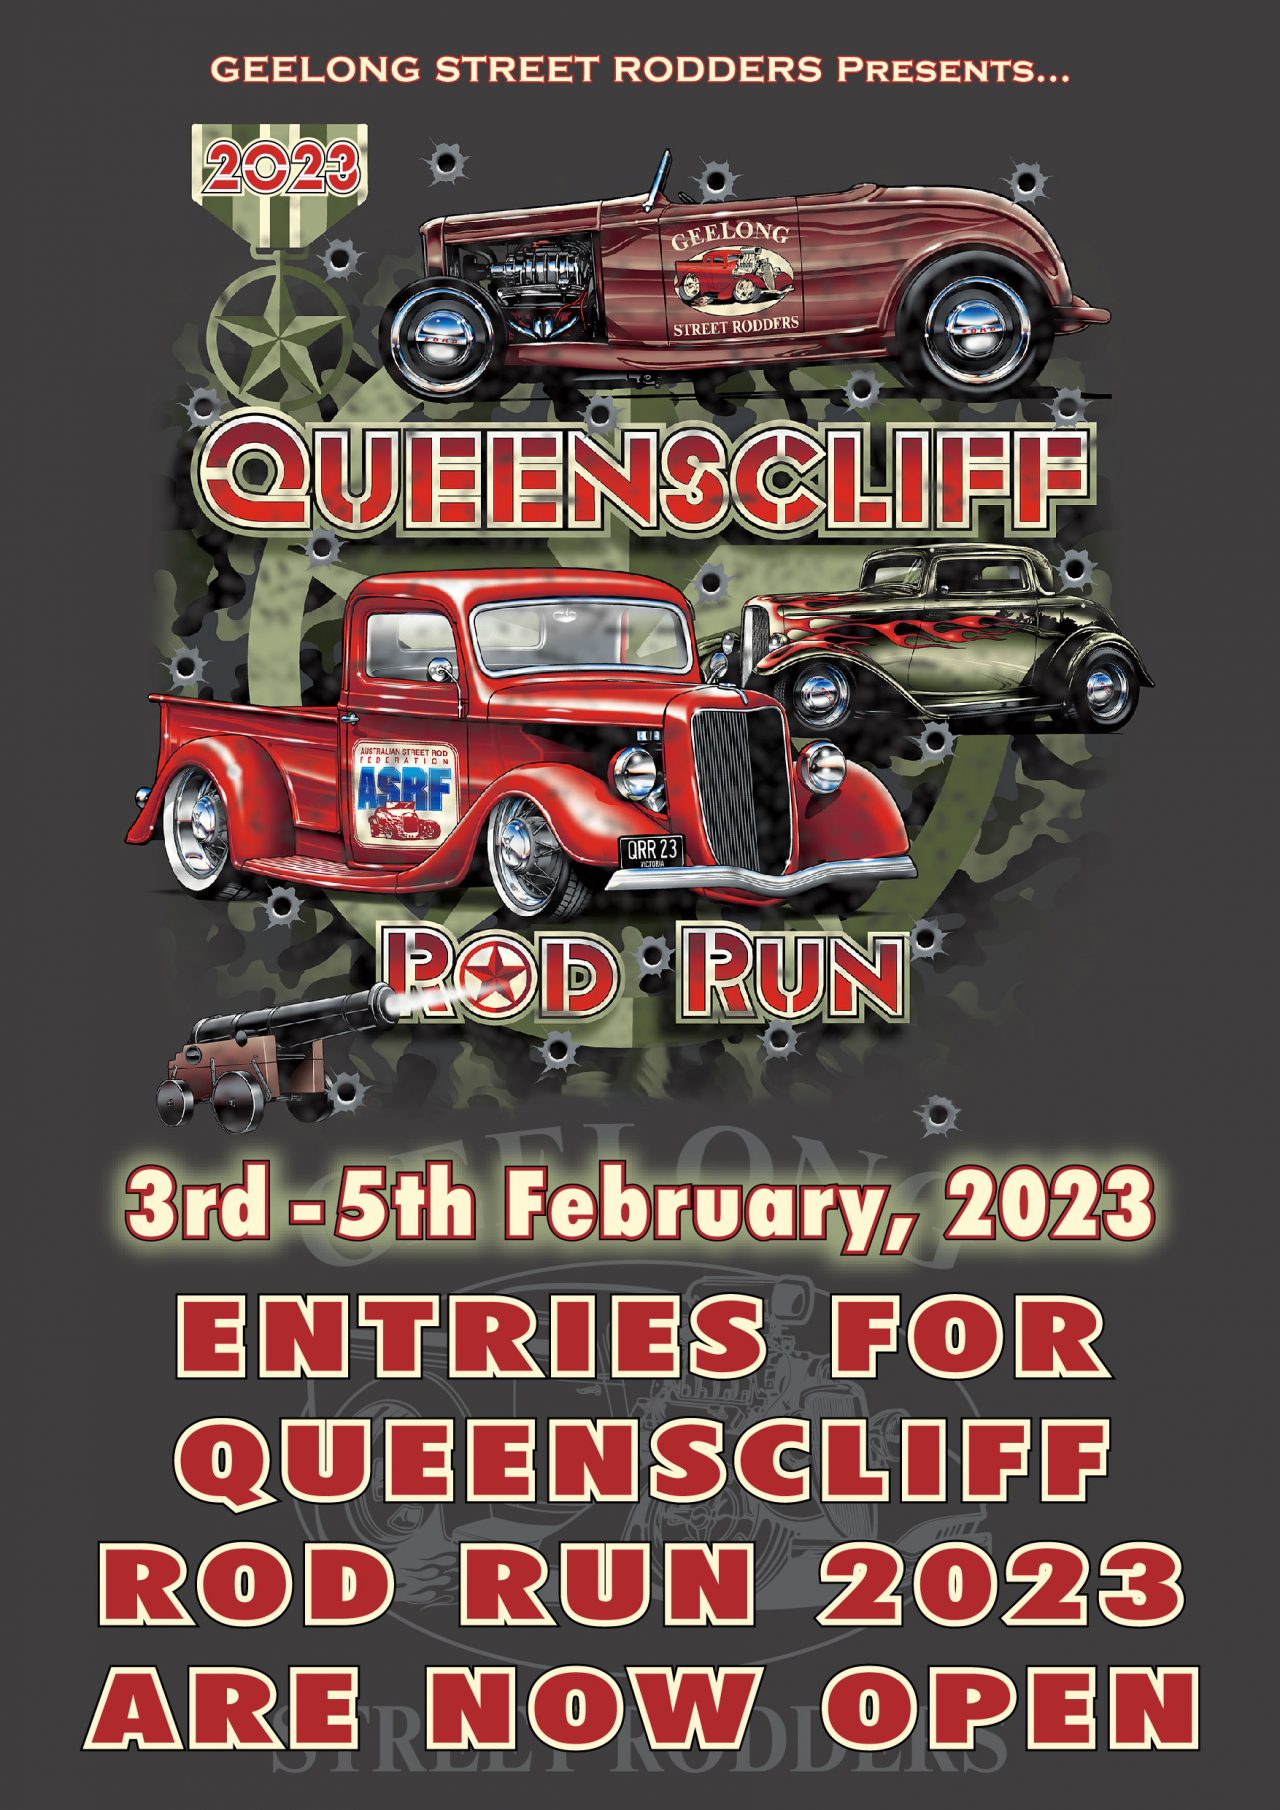 Queenscliff Rod Run Geelong Street Rodders